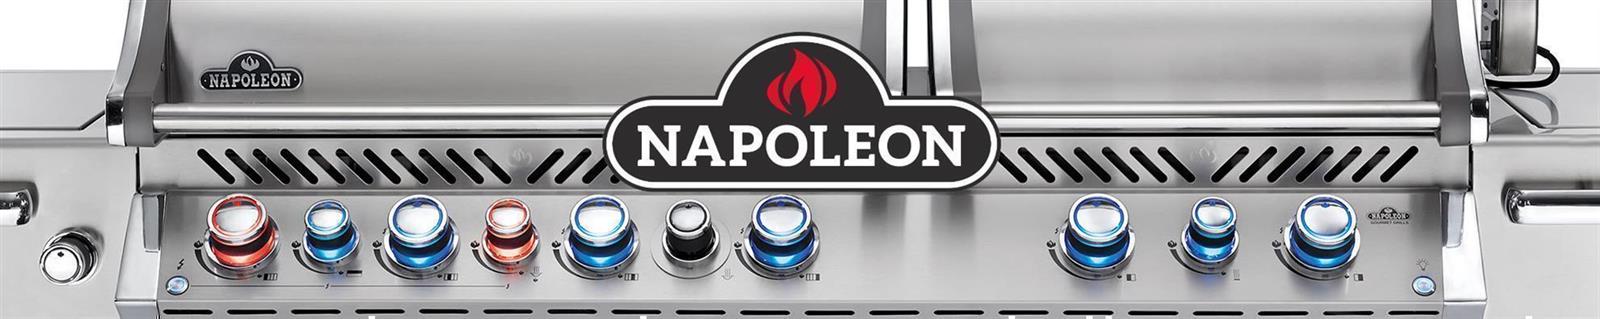 Napoleon - Grill Protector